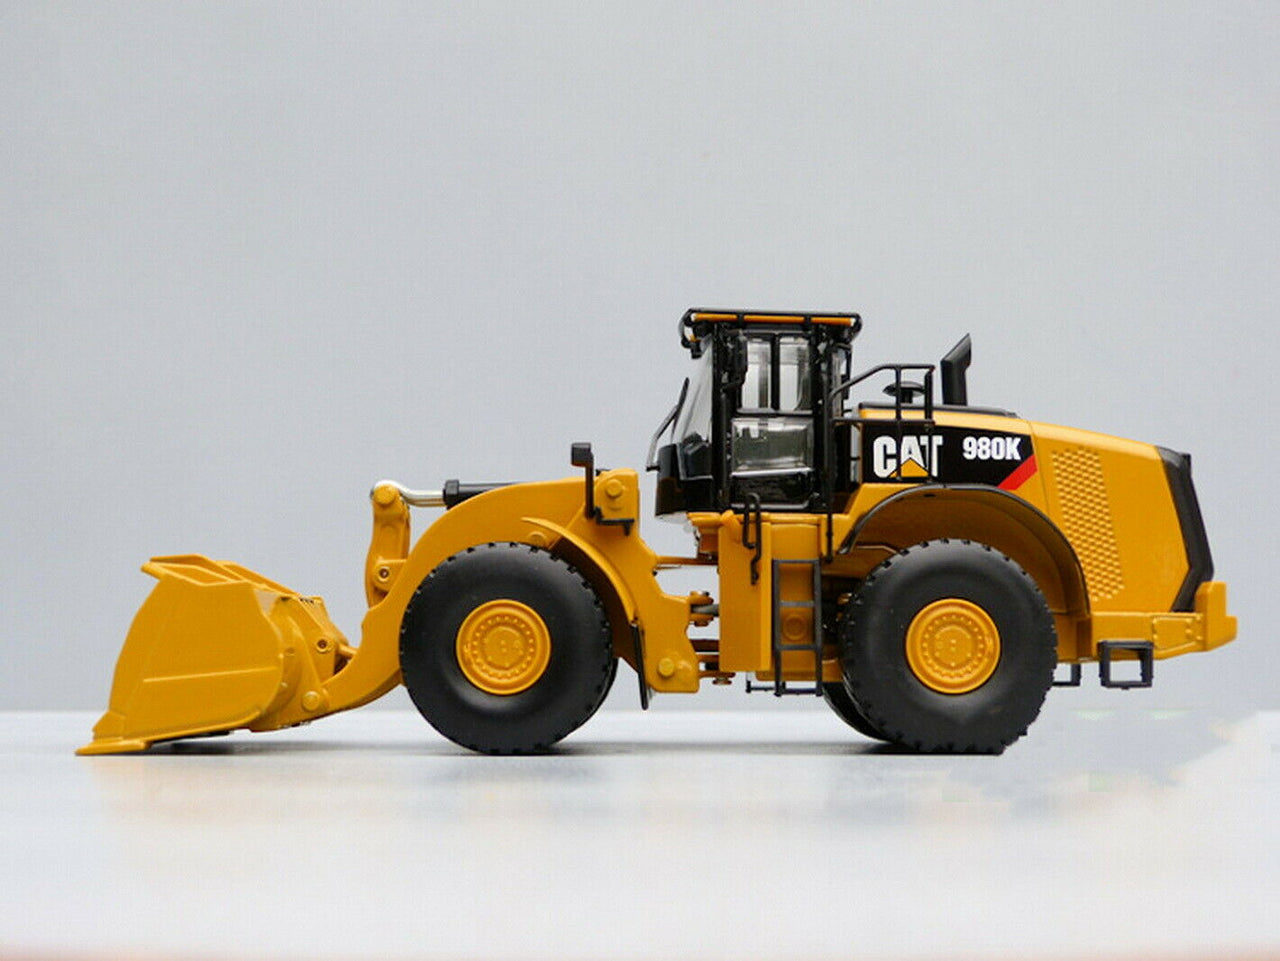 55289 Caterpillar 980K Wheel Loader 1:50 Scale